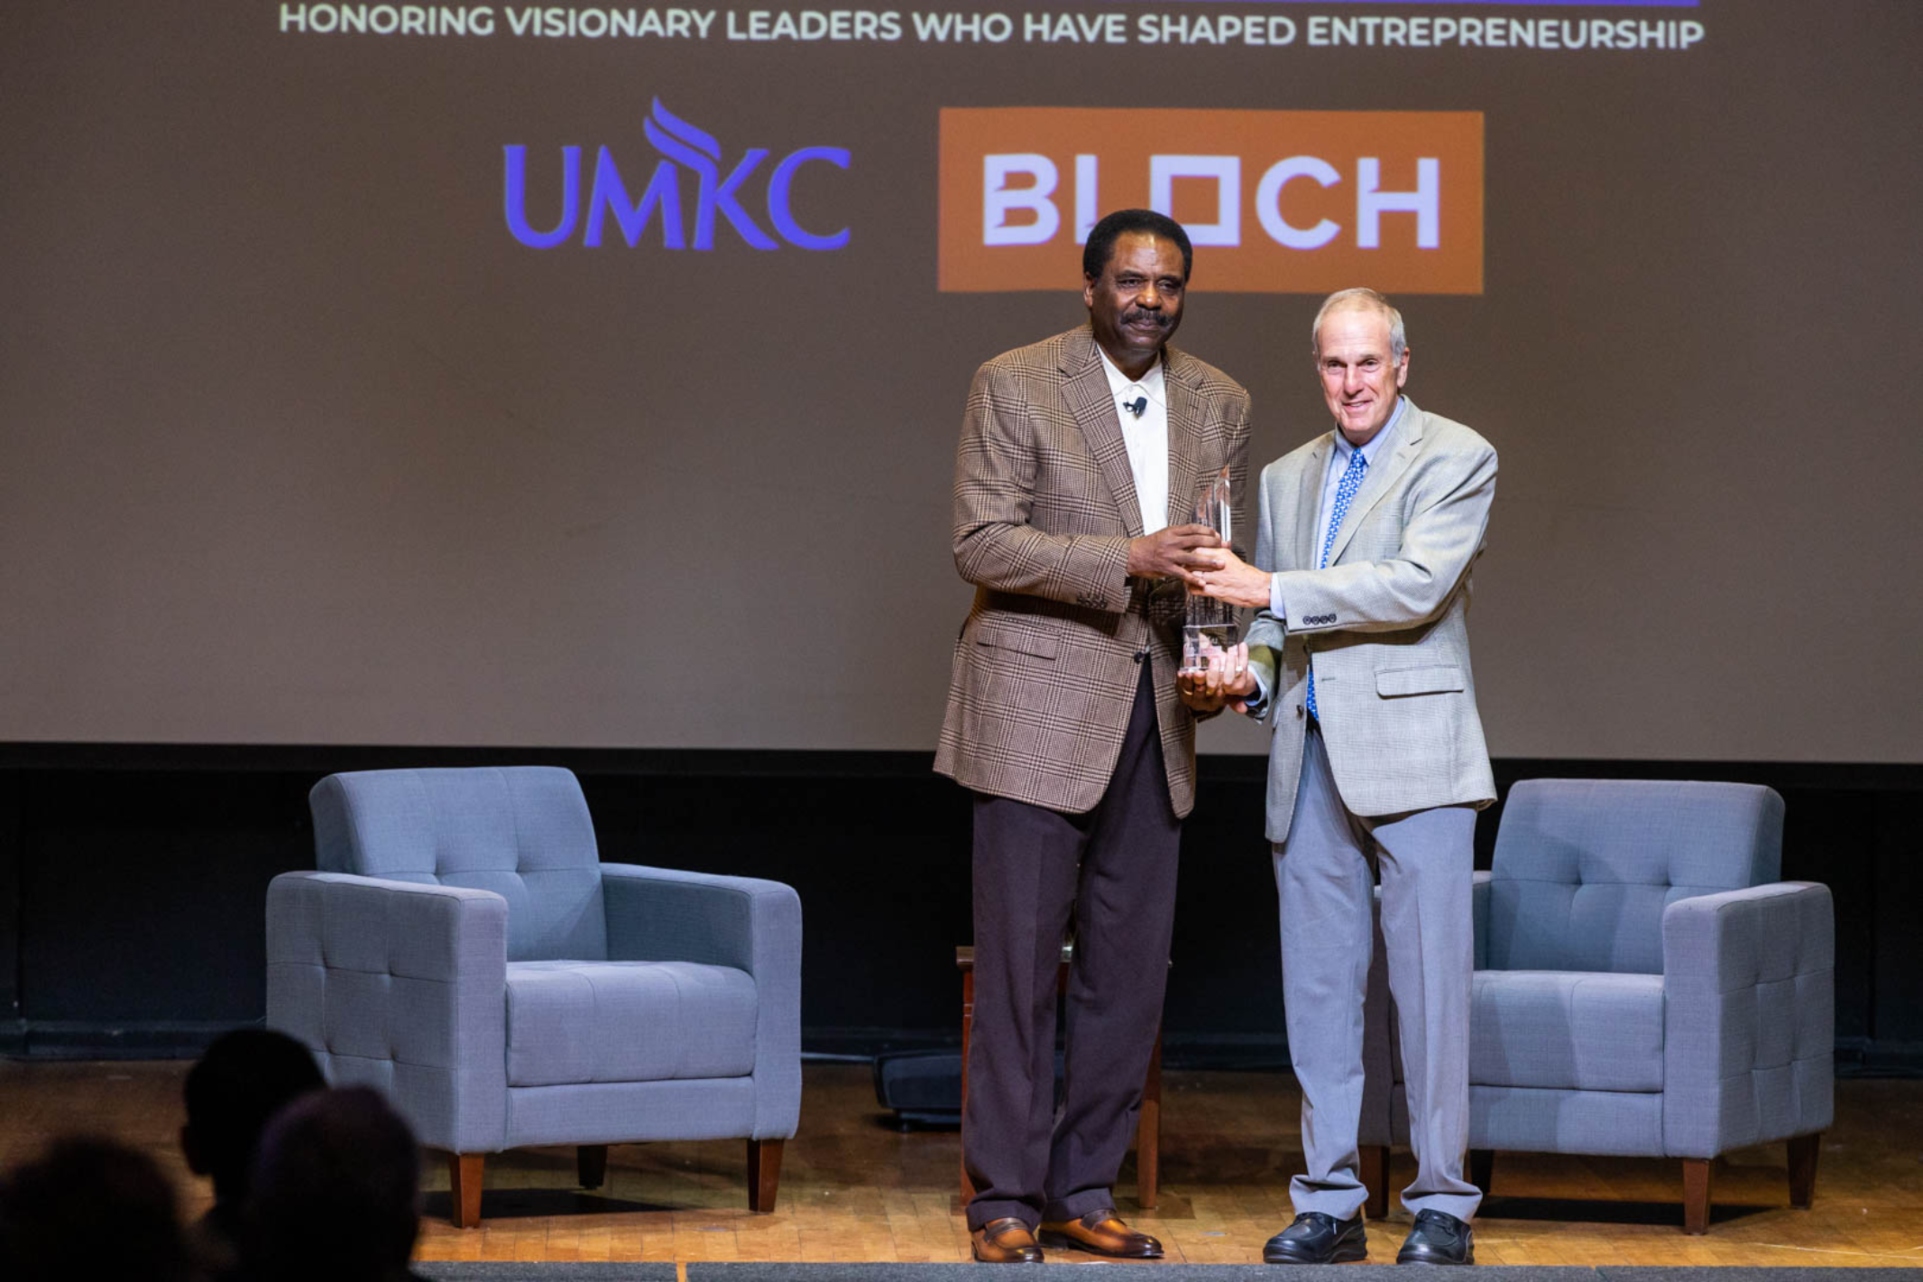 Tom Bloch presents the Henry W. Bloch International Entrepreneur of the Year Award to David Steward